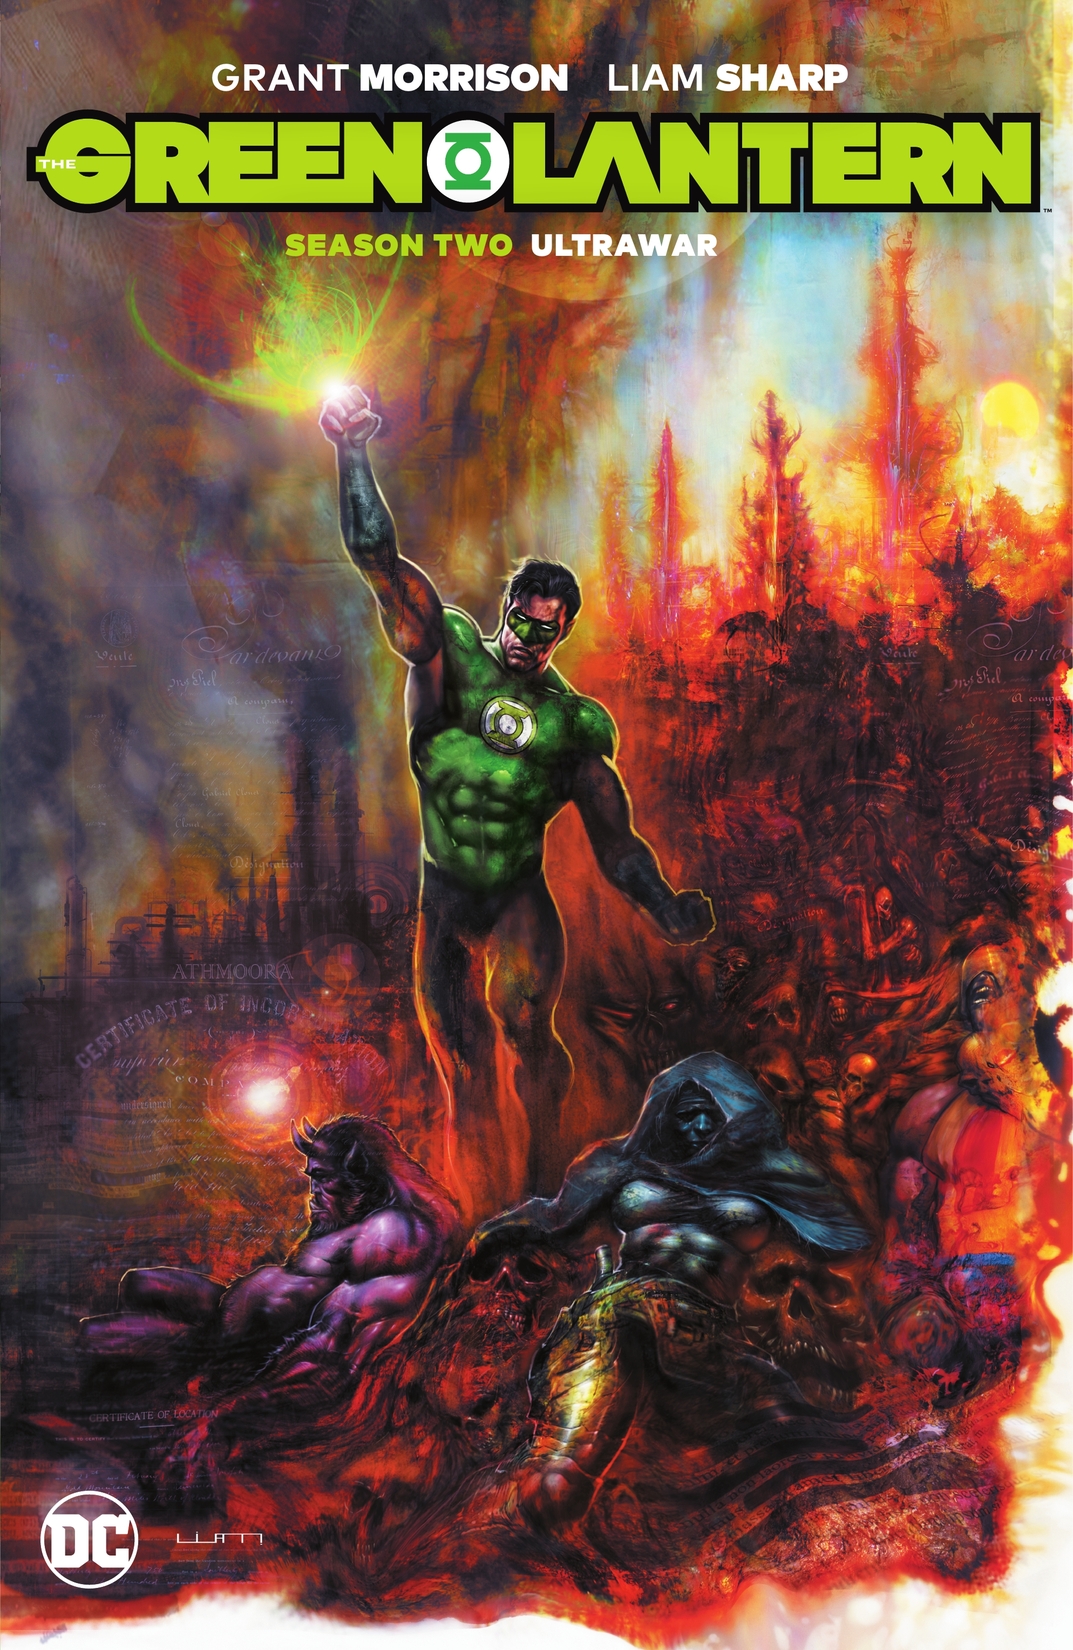 The Green Lantern Season Two Vol. 2: Ultrawar preview images